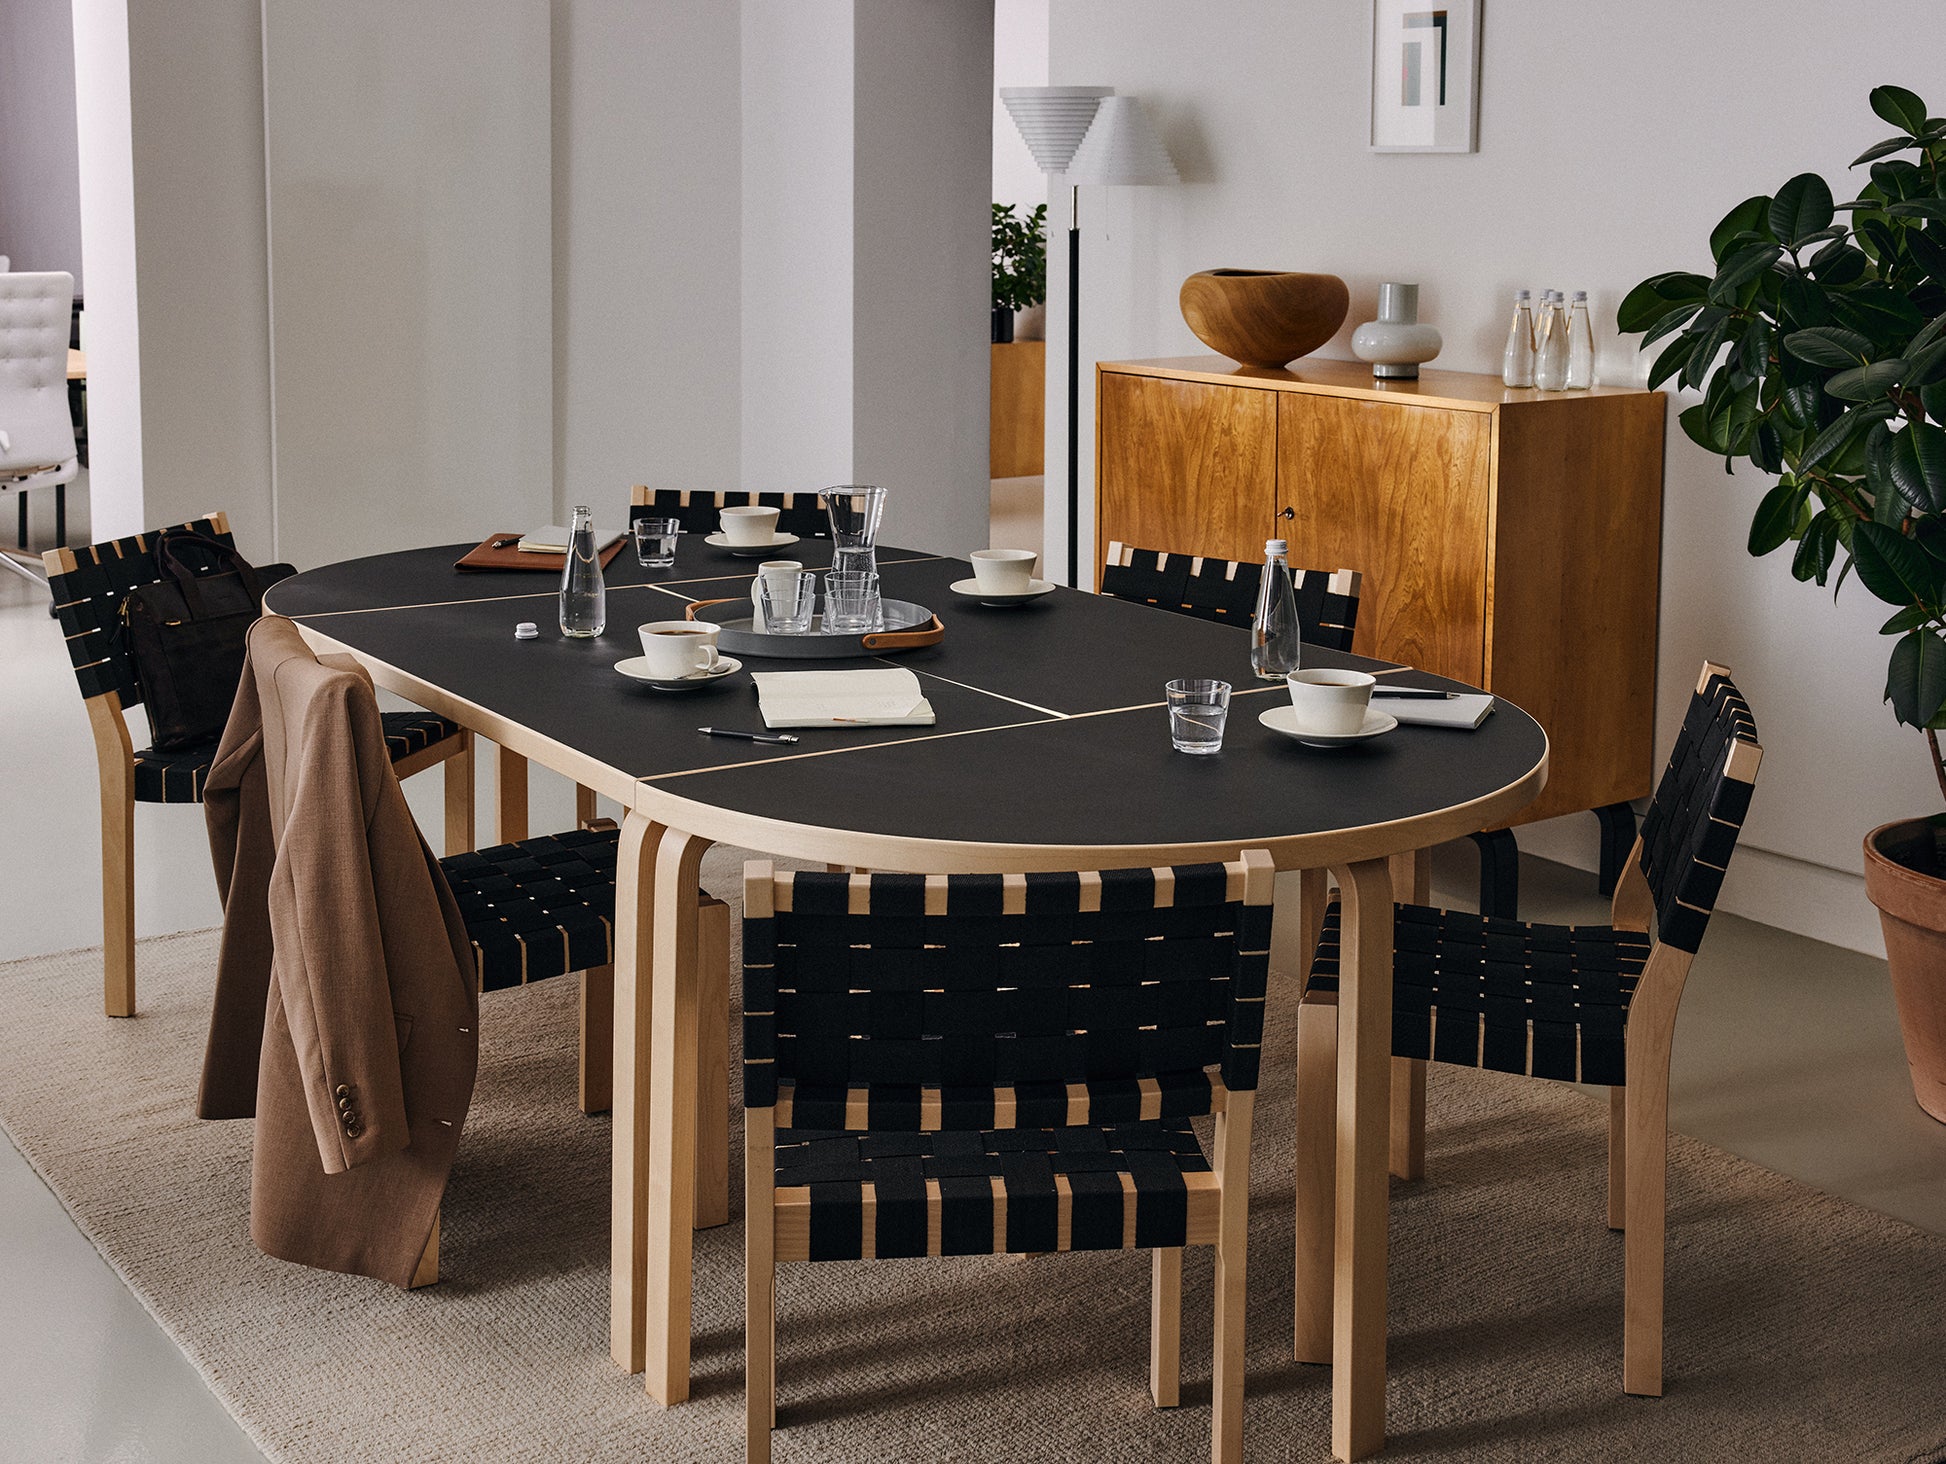 Aalto Table Rectangular by Artek - 80A (120 x 60 cm)